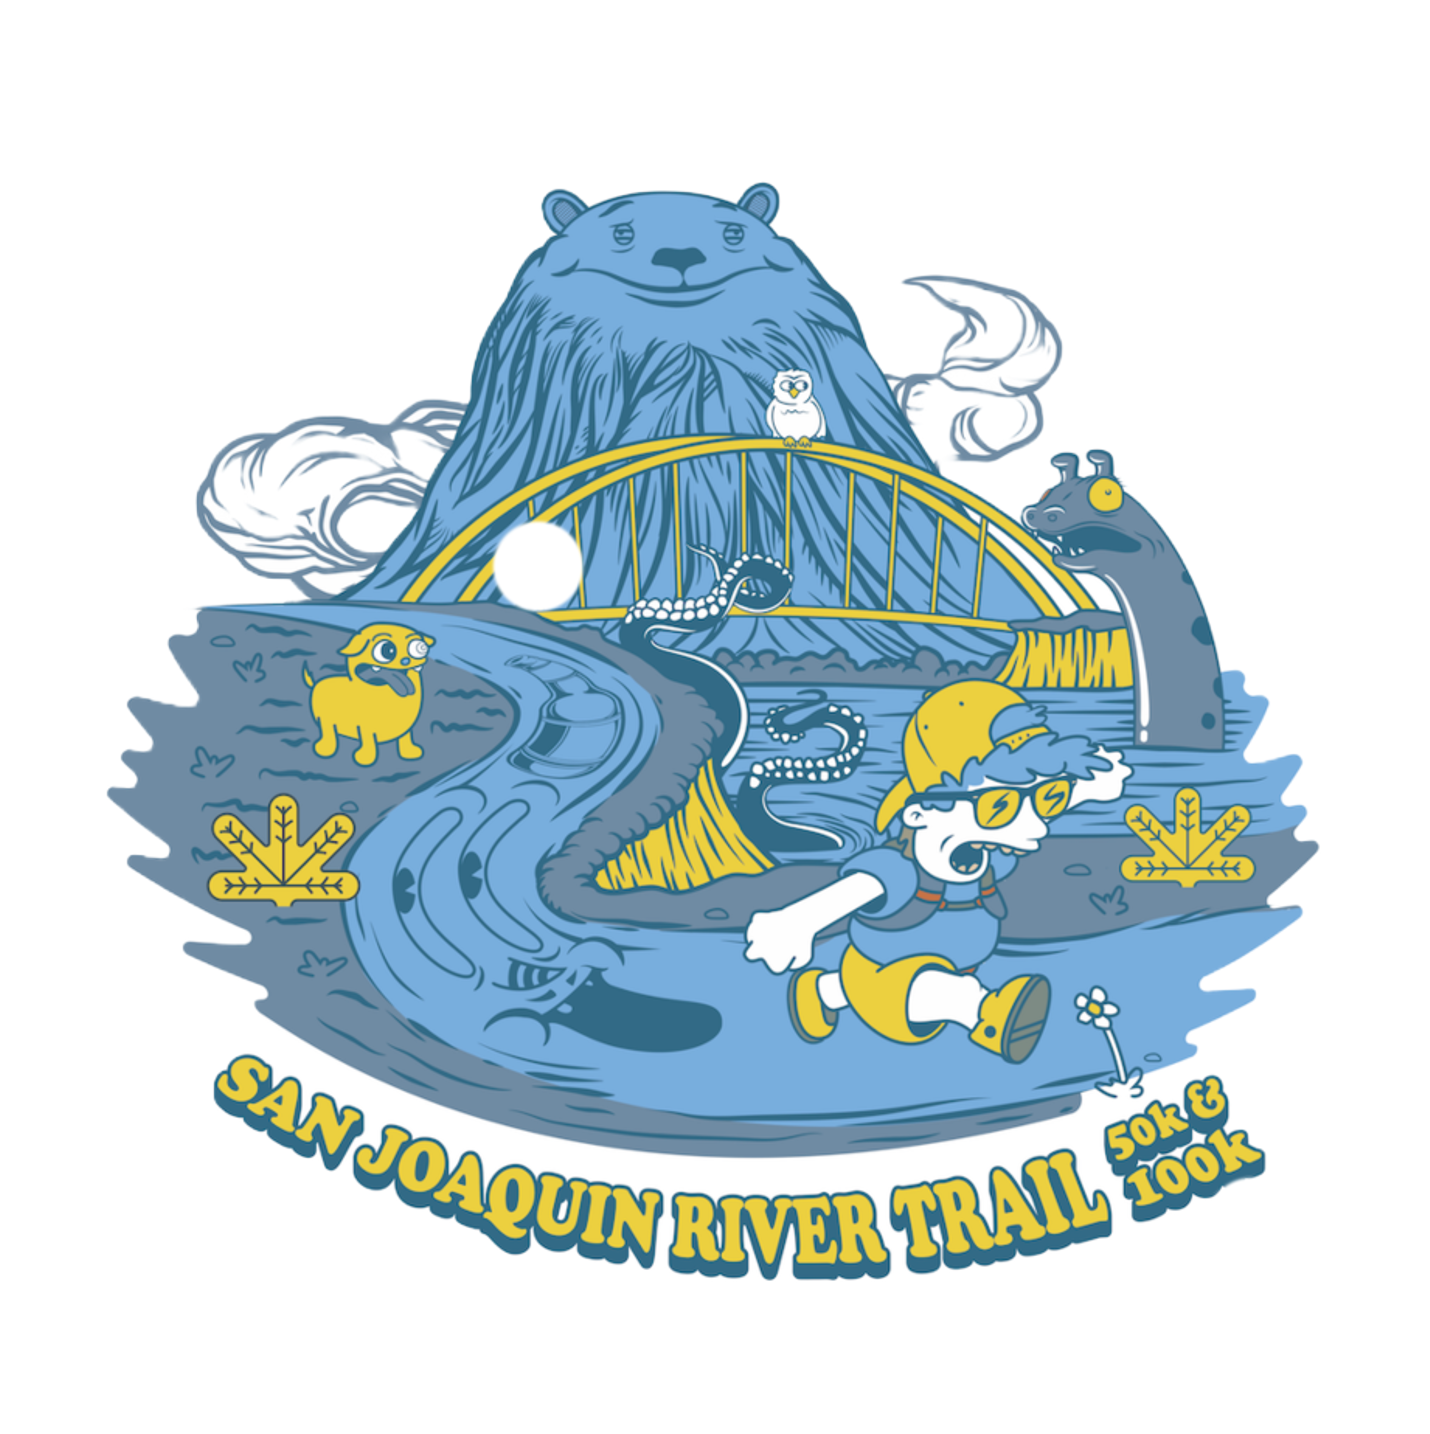 Logo-San-Joaquin-River-Trail